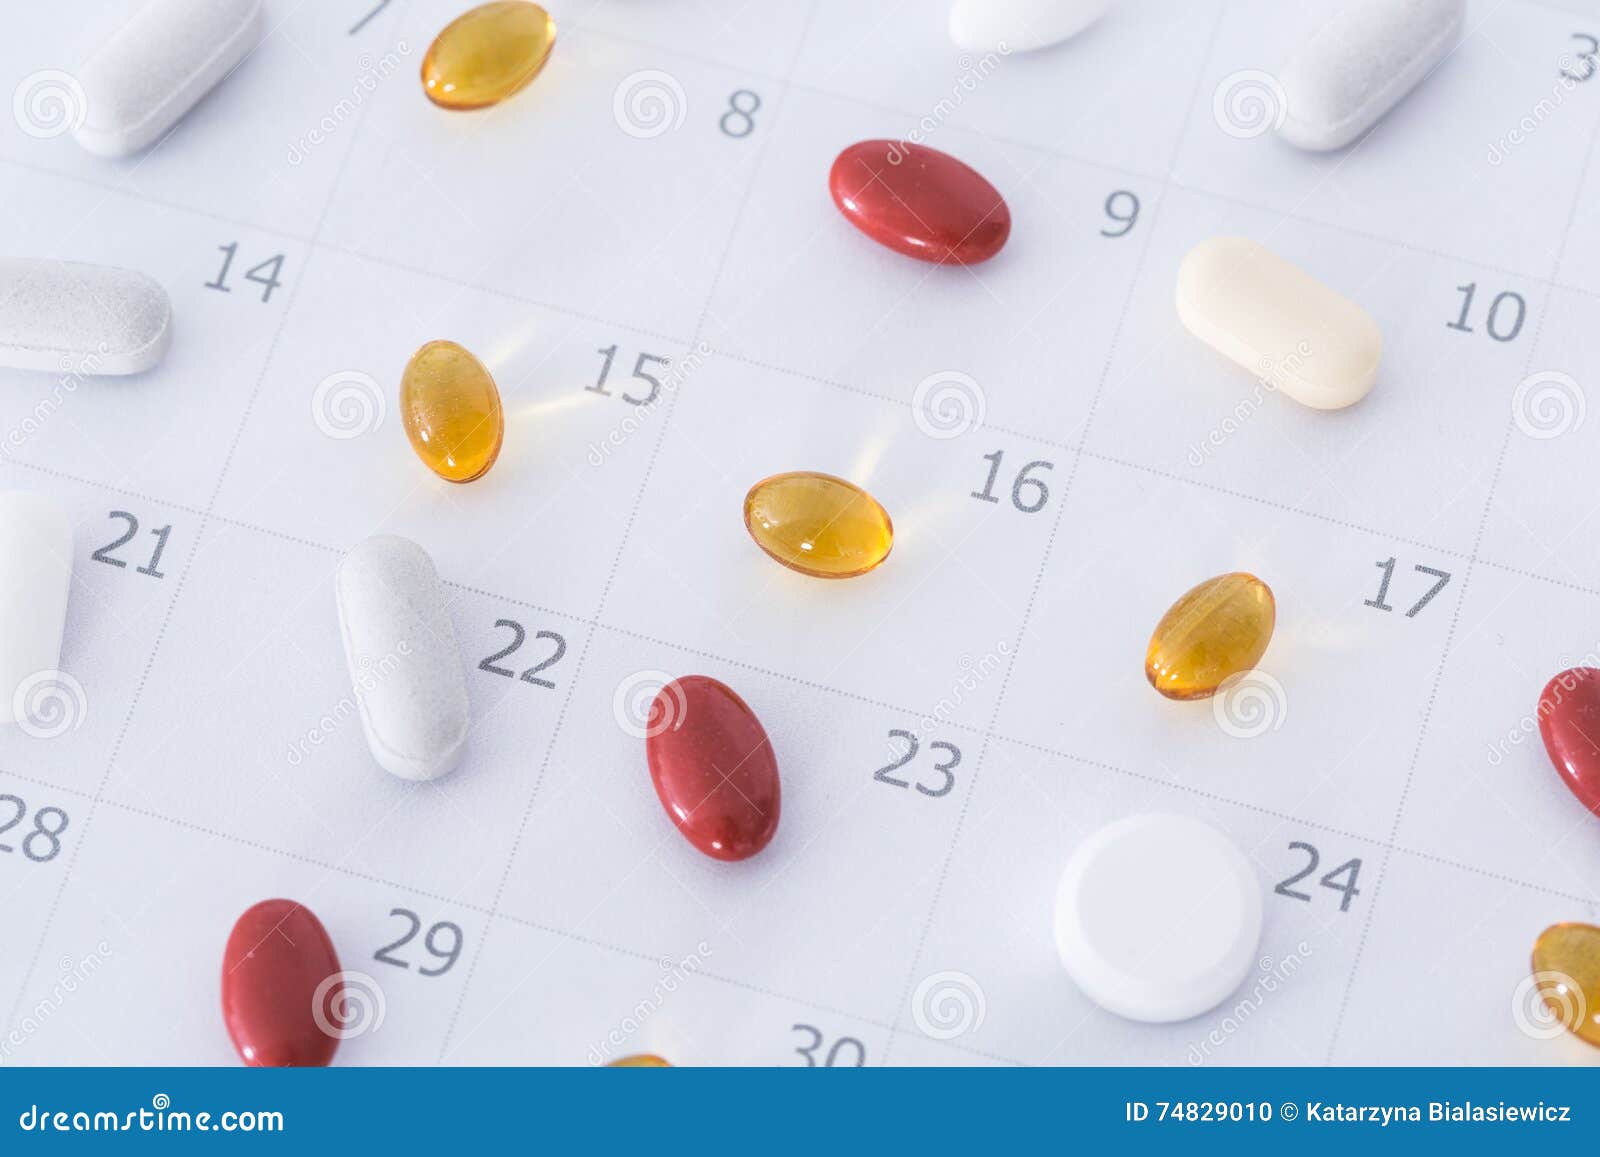 pills on a schedule